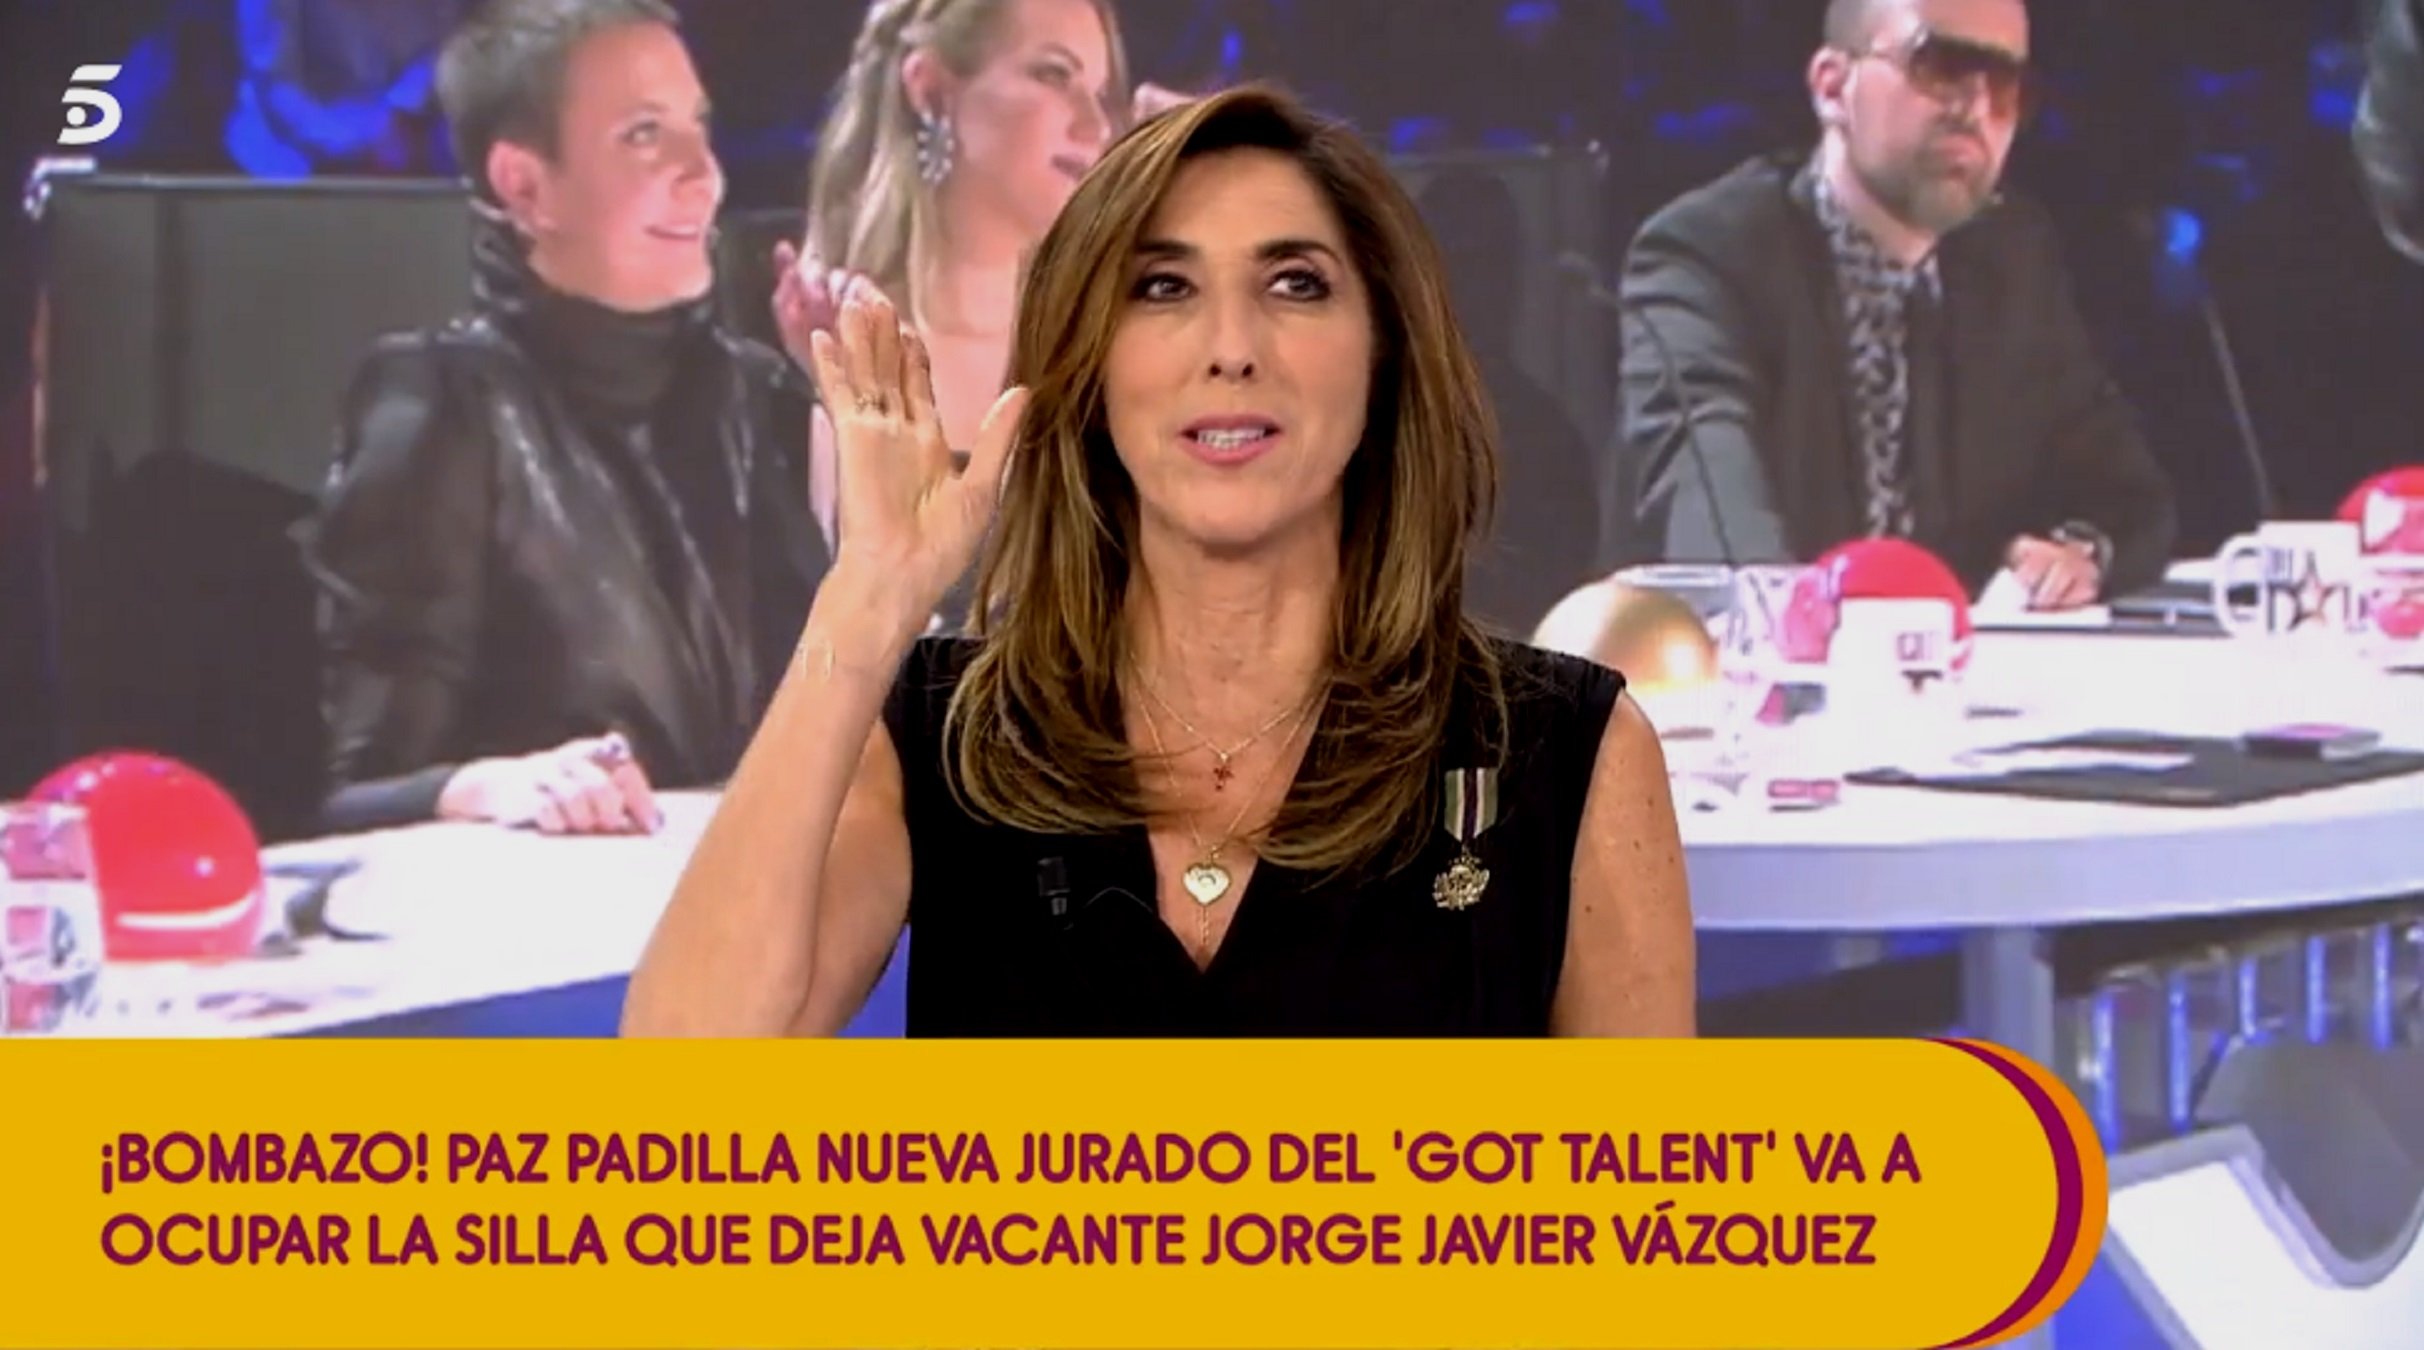 Paz Padilla li pren el lloc a Jorge Javier a 'Got Talent'